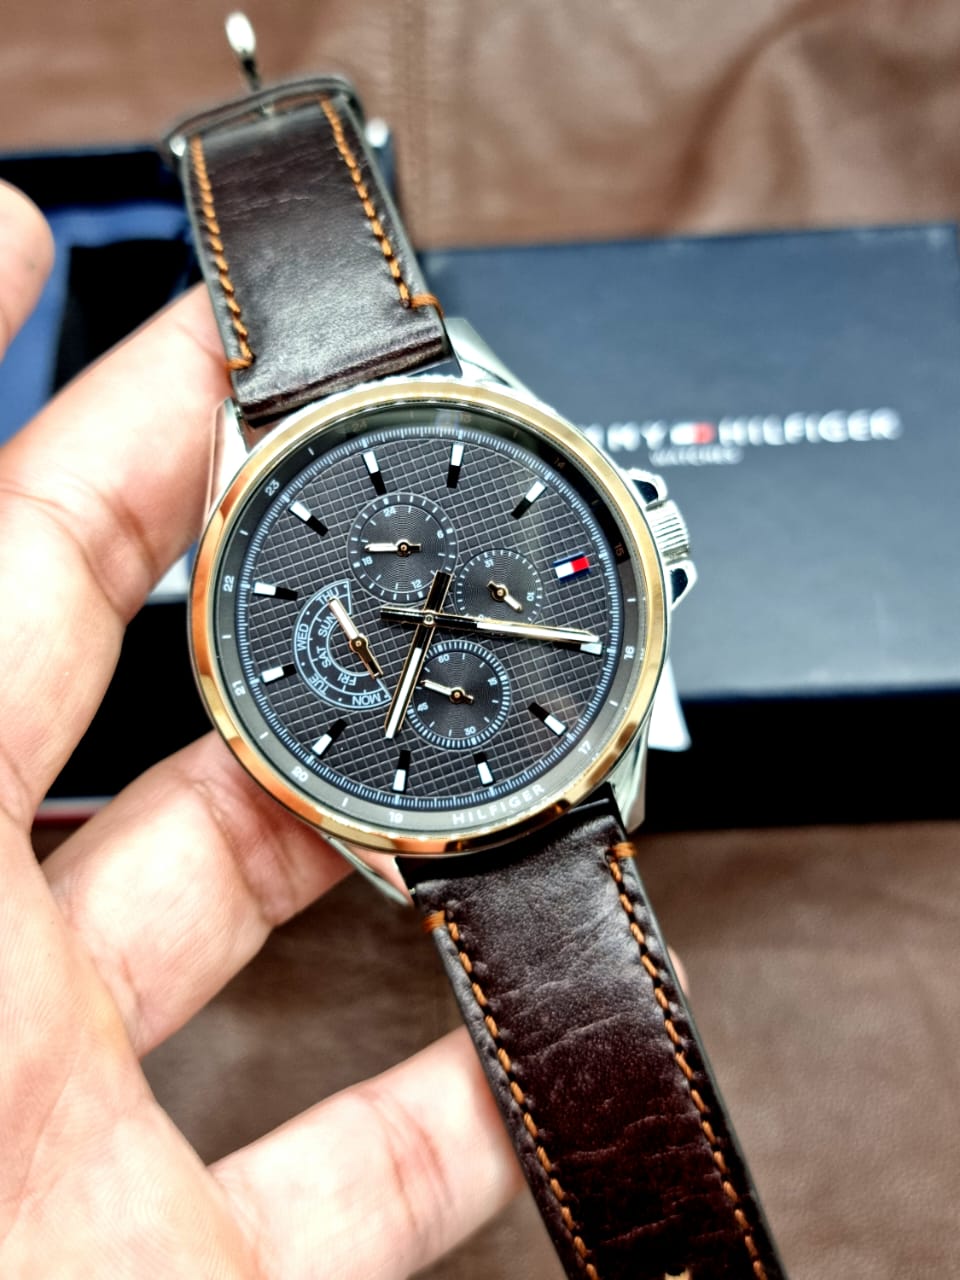 Tommy Hilfiger Men's Multi dial Quartz Watch with Leather Strap 1791615